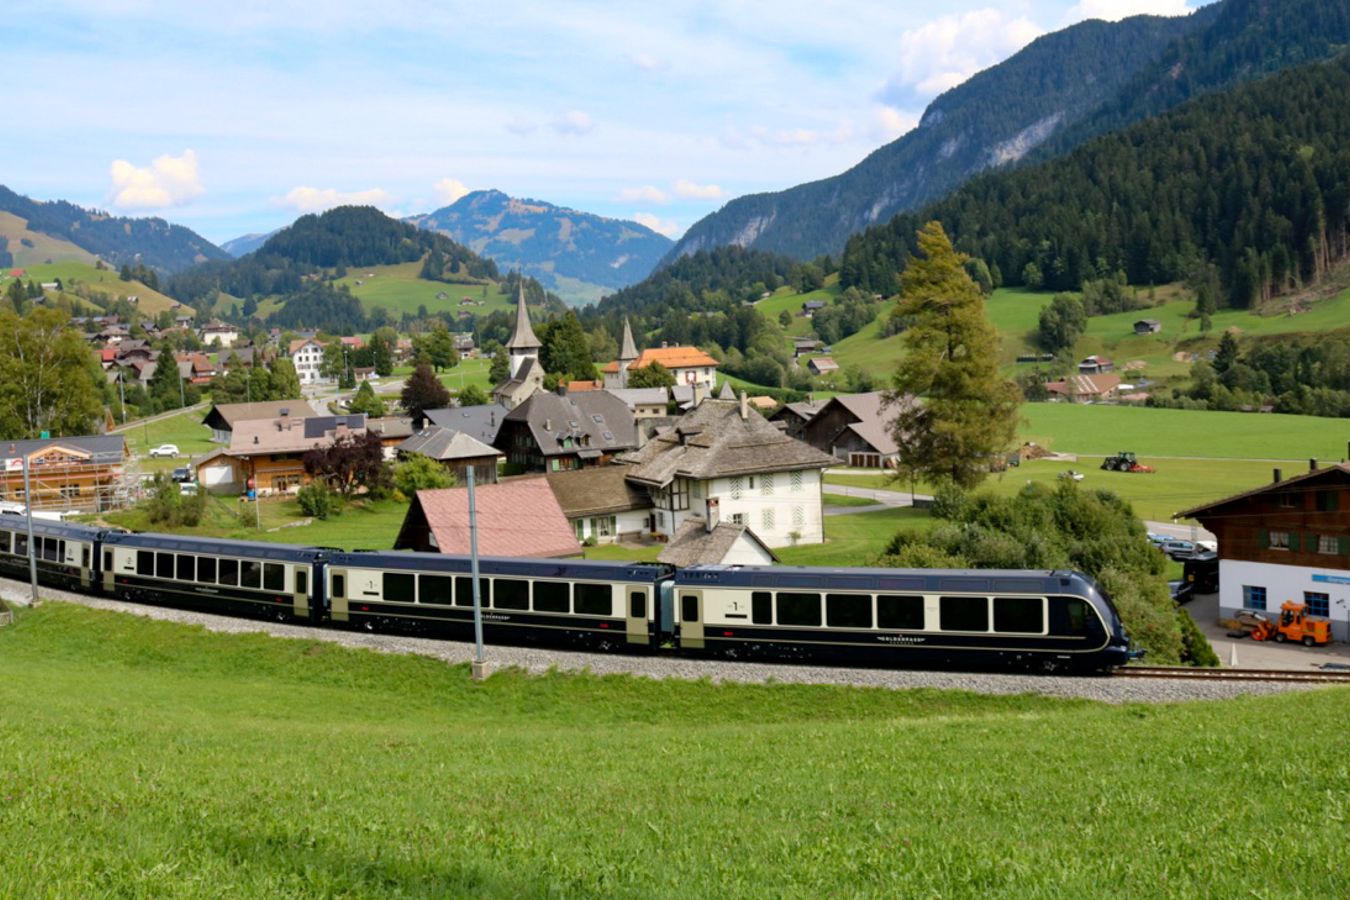 The amazing new Swiss mountain train that can jump rail tracks | CNN